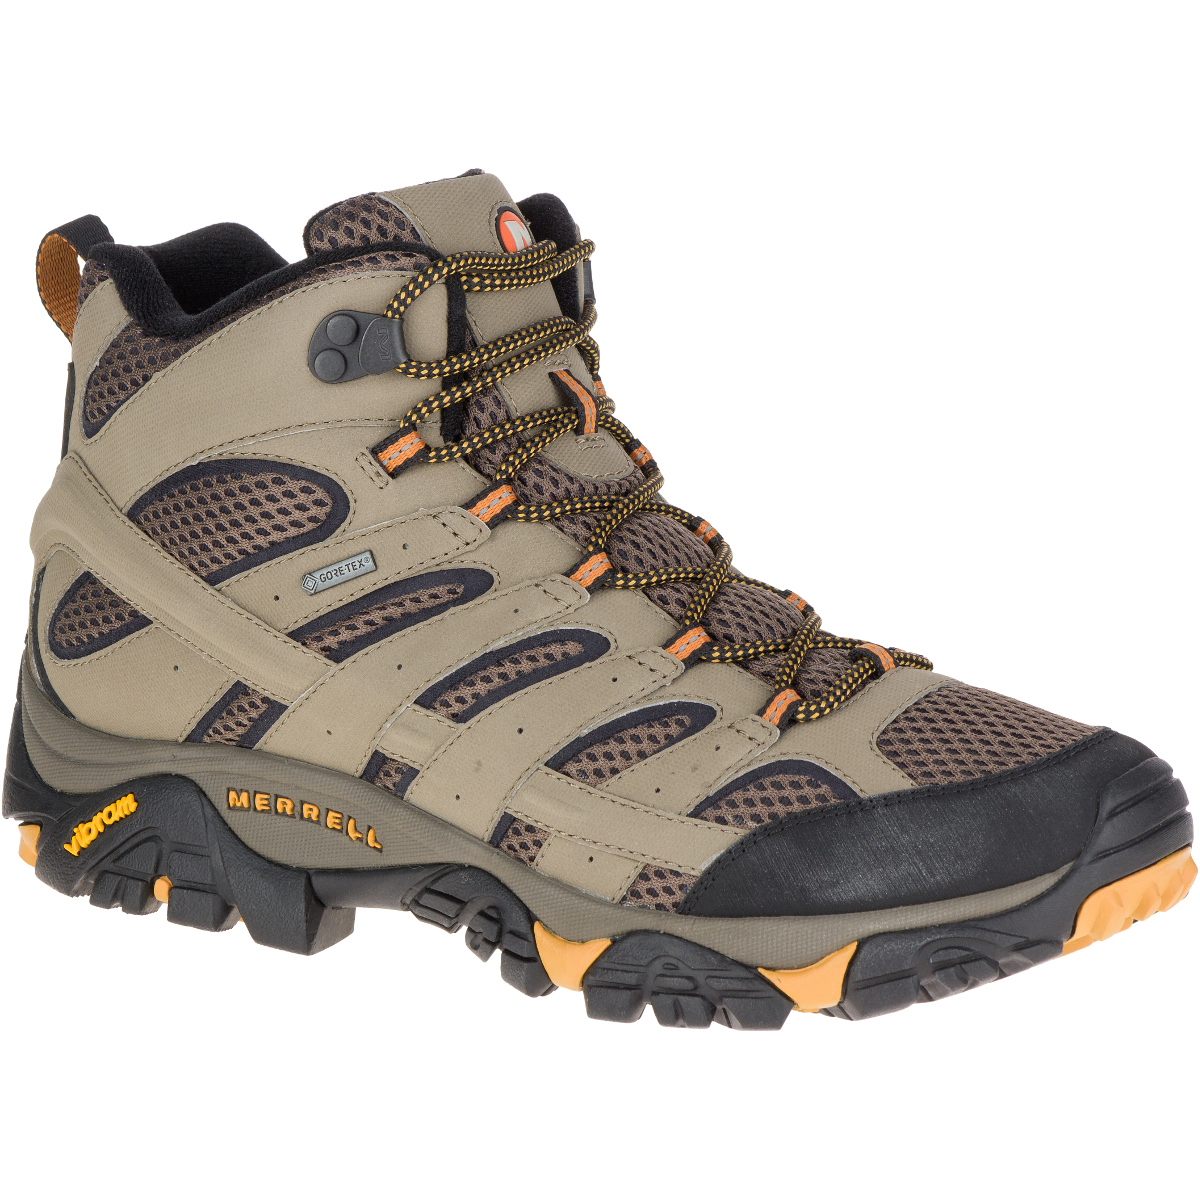 Merrell Men's Moab 2 Mid Gore-Tex Hiking Boots, Walnut - Brown, 11.5